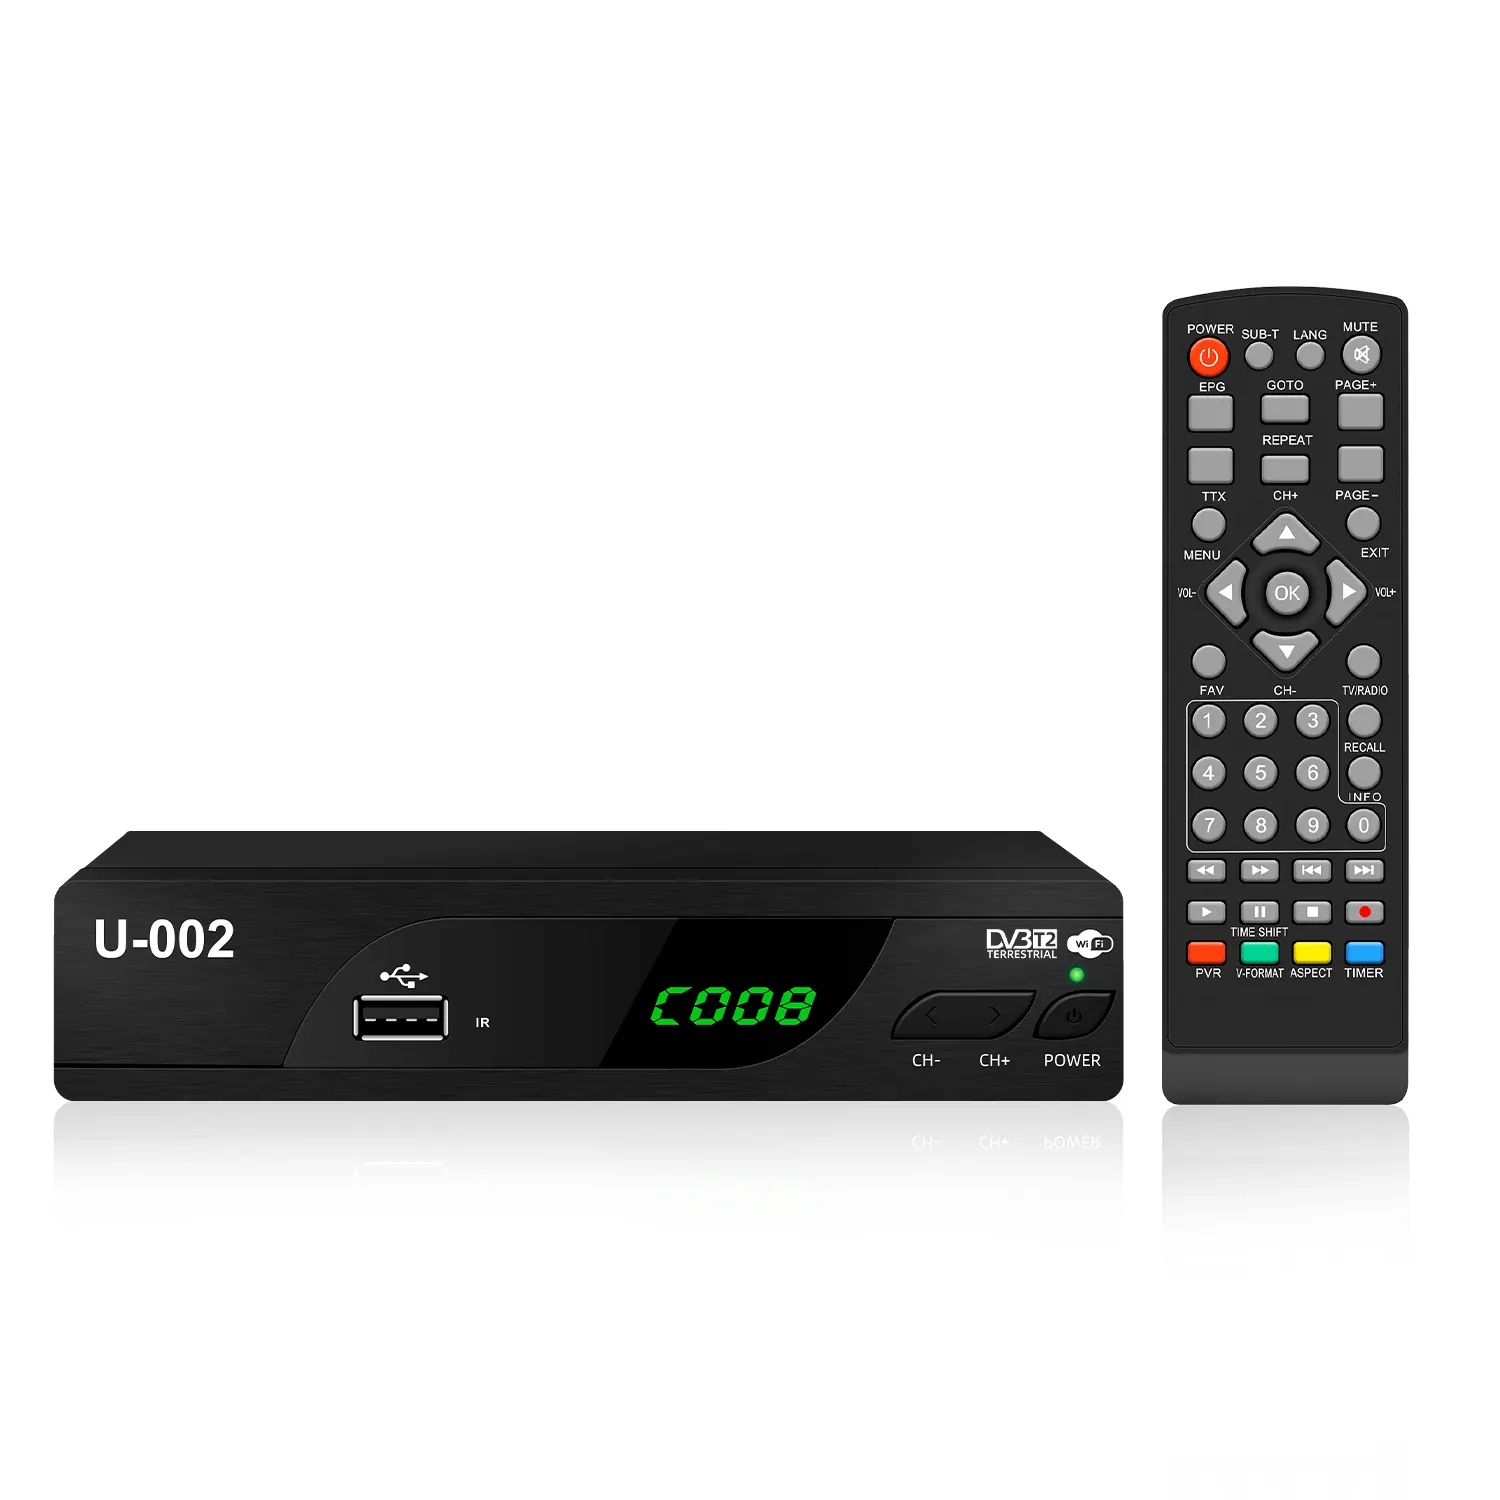 JUNUO High Quality Digital Tv Decoder 1080P Full HD Dvb T2 Receiver dvbt2 set top box